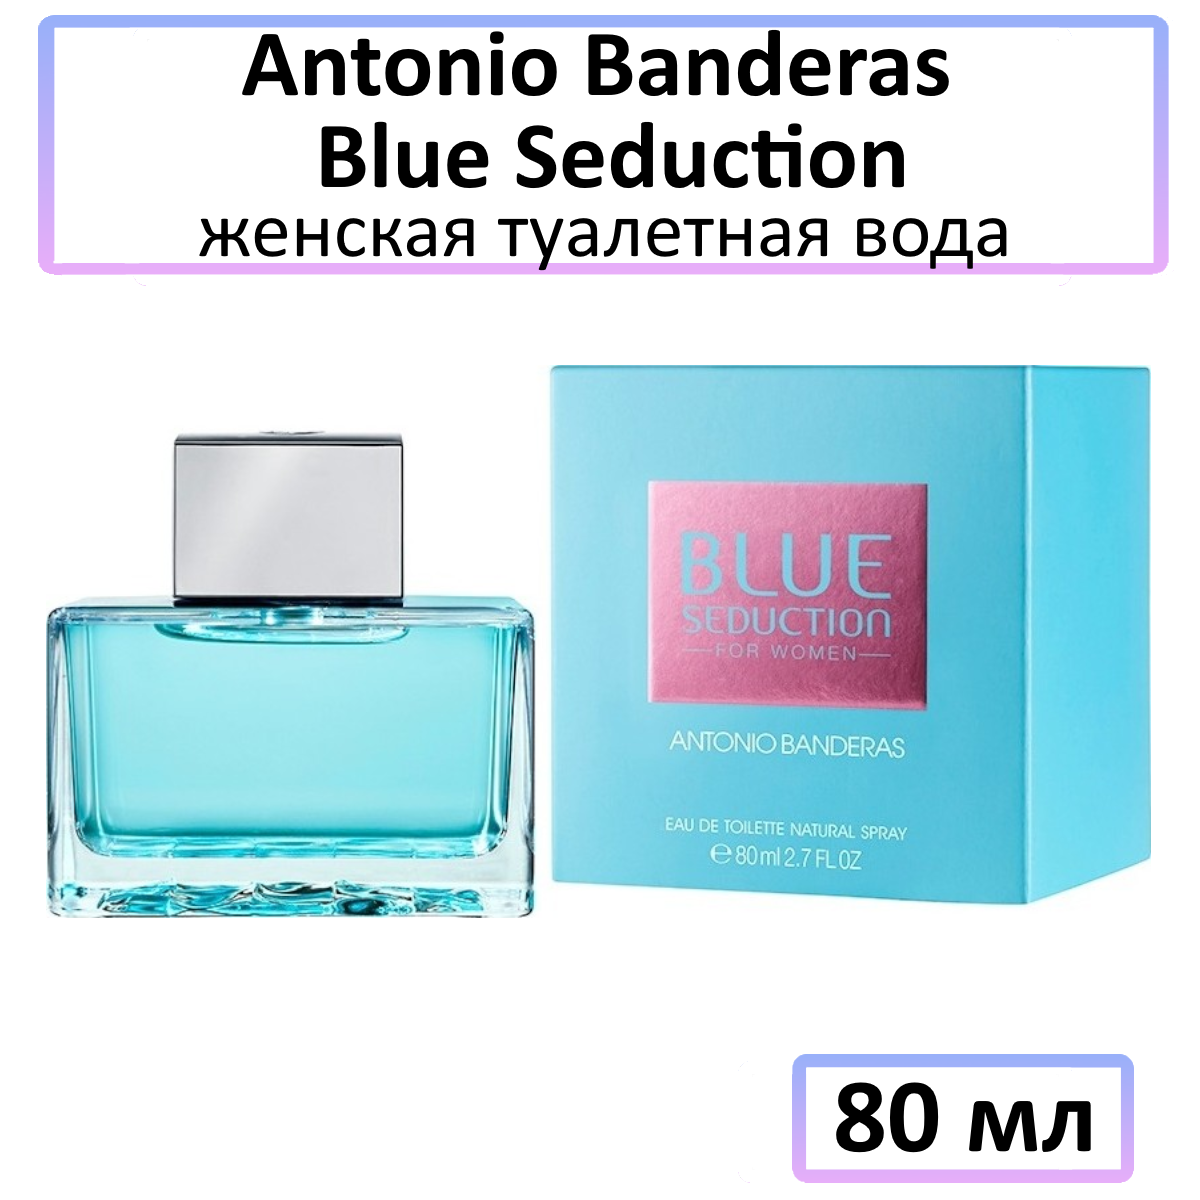 A.Banderas Blue Seduction - женская туалетная вода, 80 мл